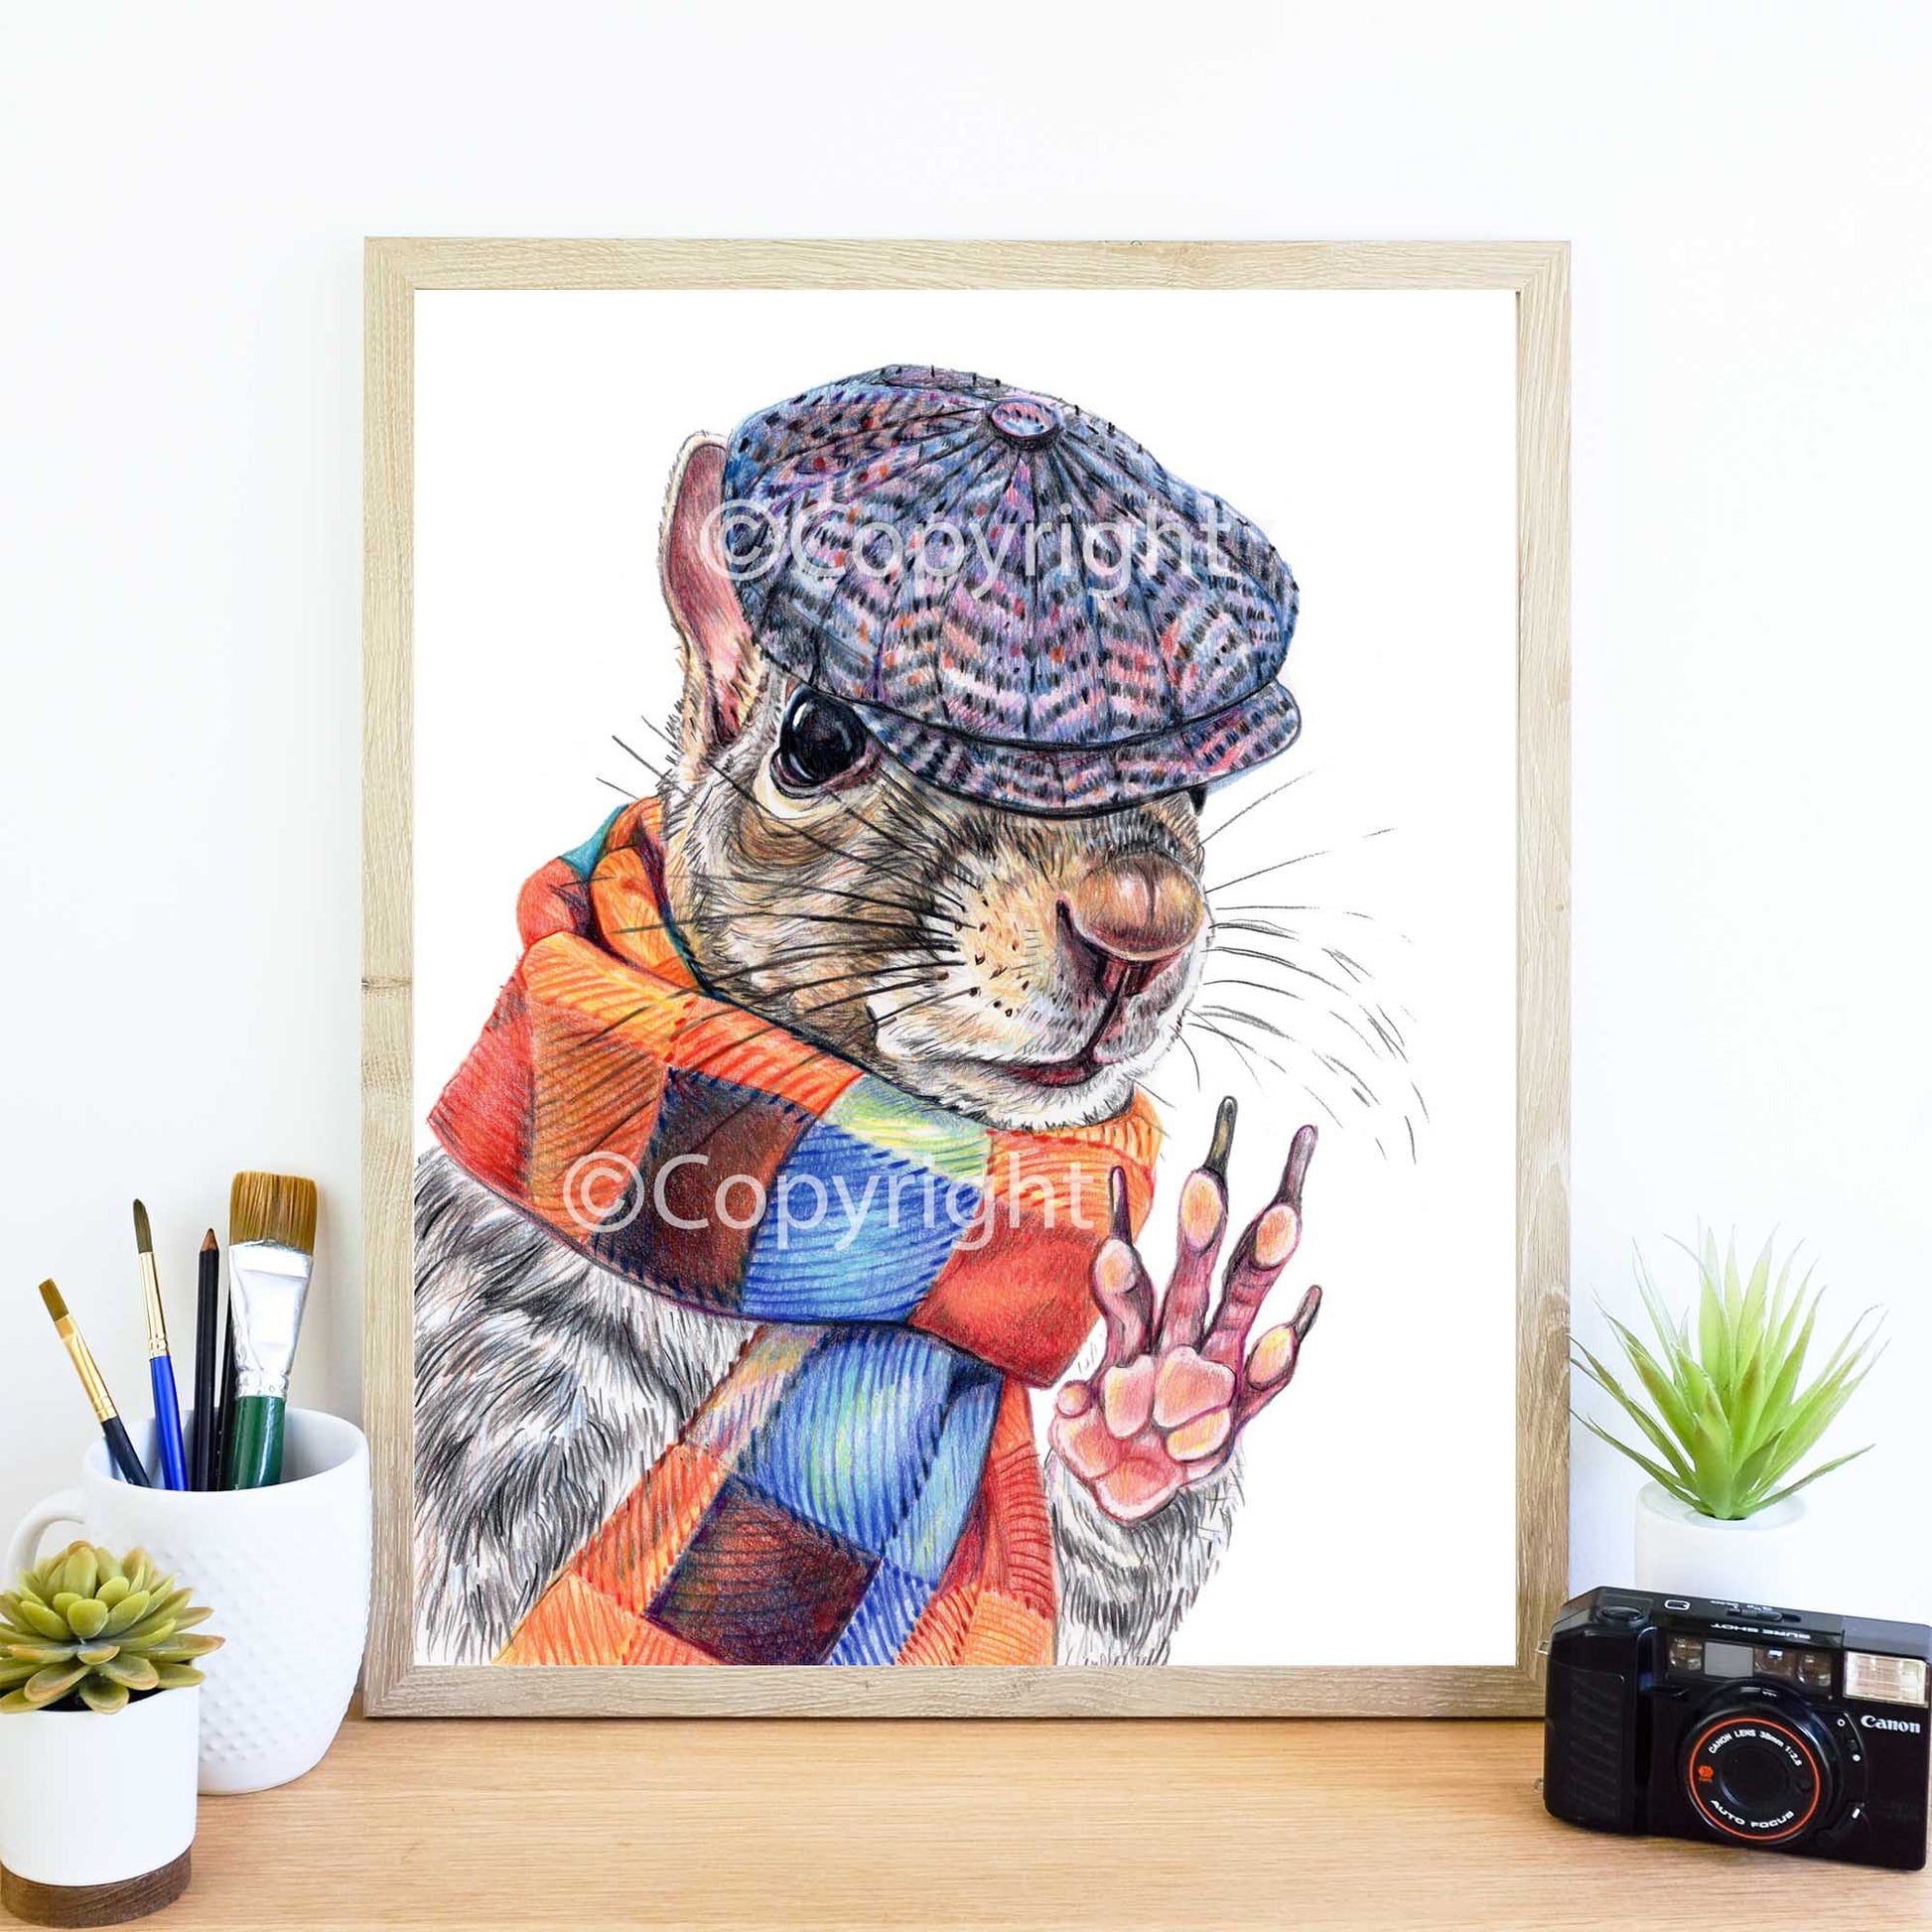 Coloured pencil drawing of a dapper Eastern grey squirrel wearing a newsboy hat and wool scarf. Art by Deidre Wicks